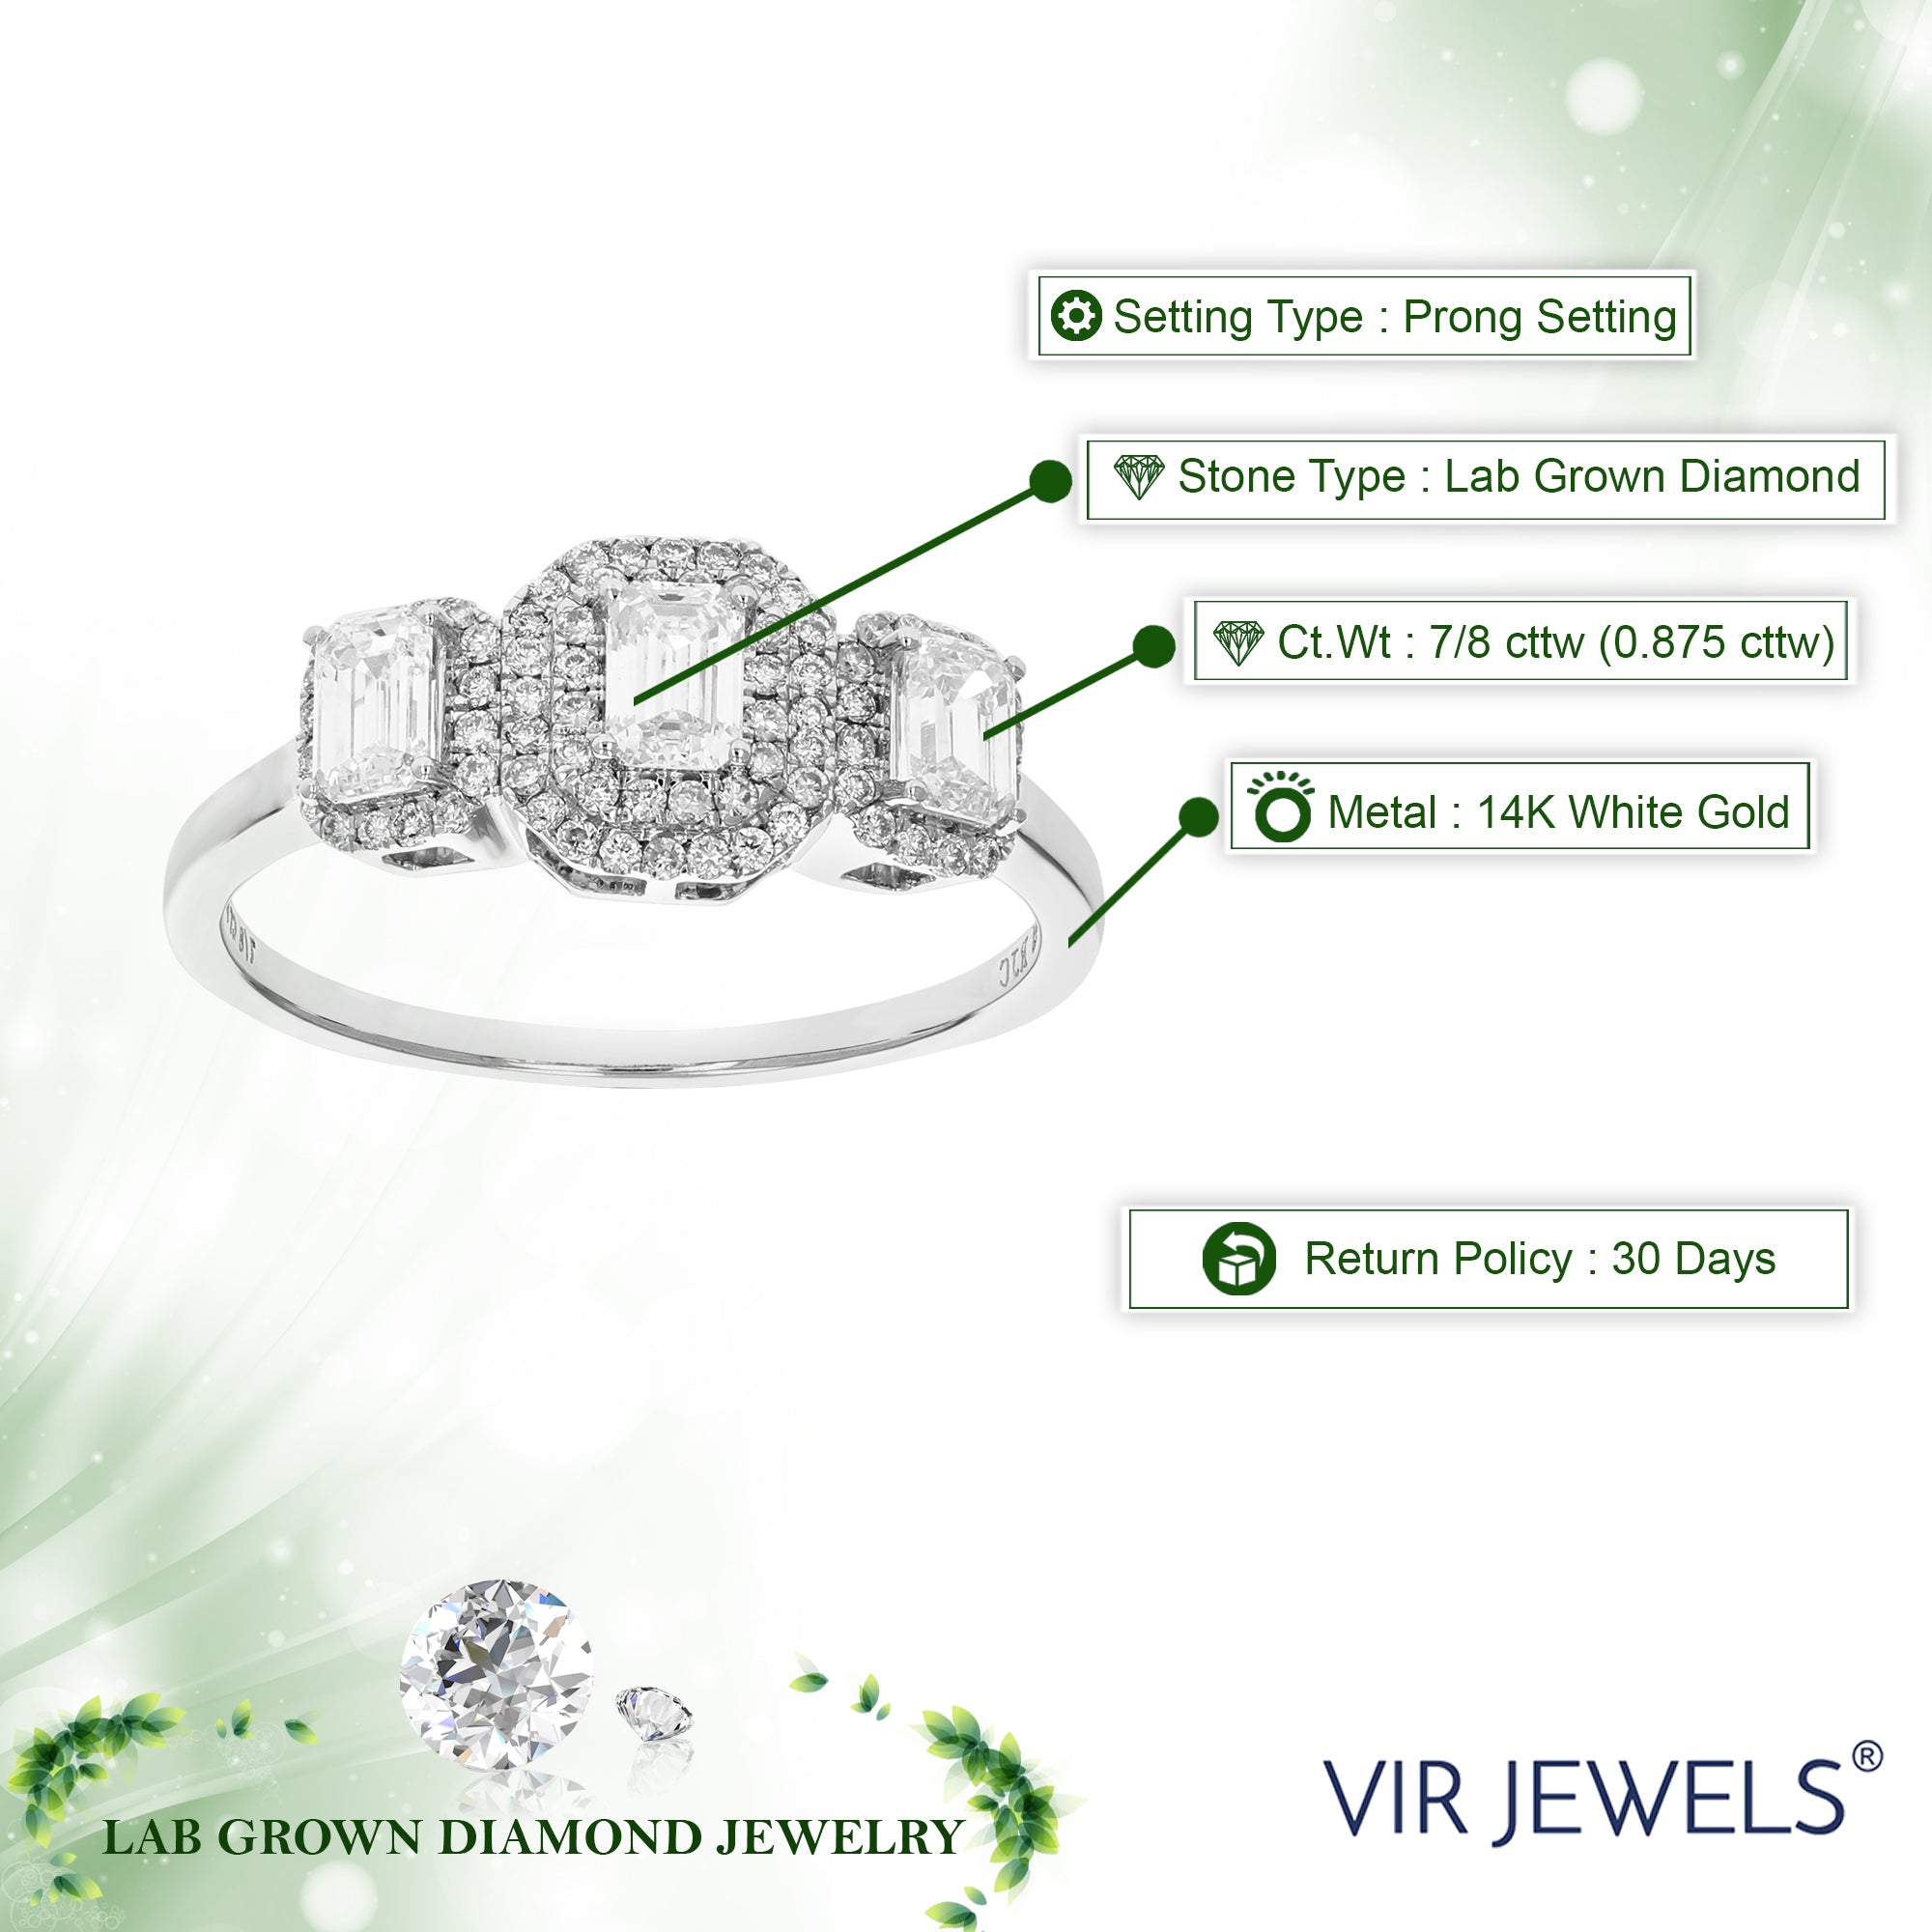 Emerald Cut 3 Stone Diamond Engagement Ring